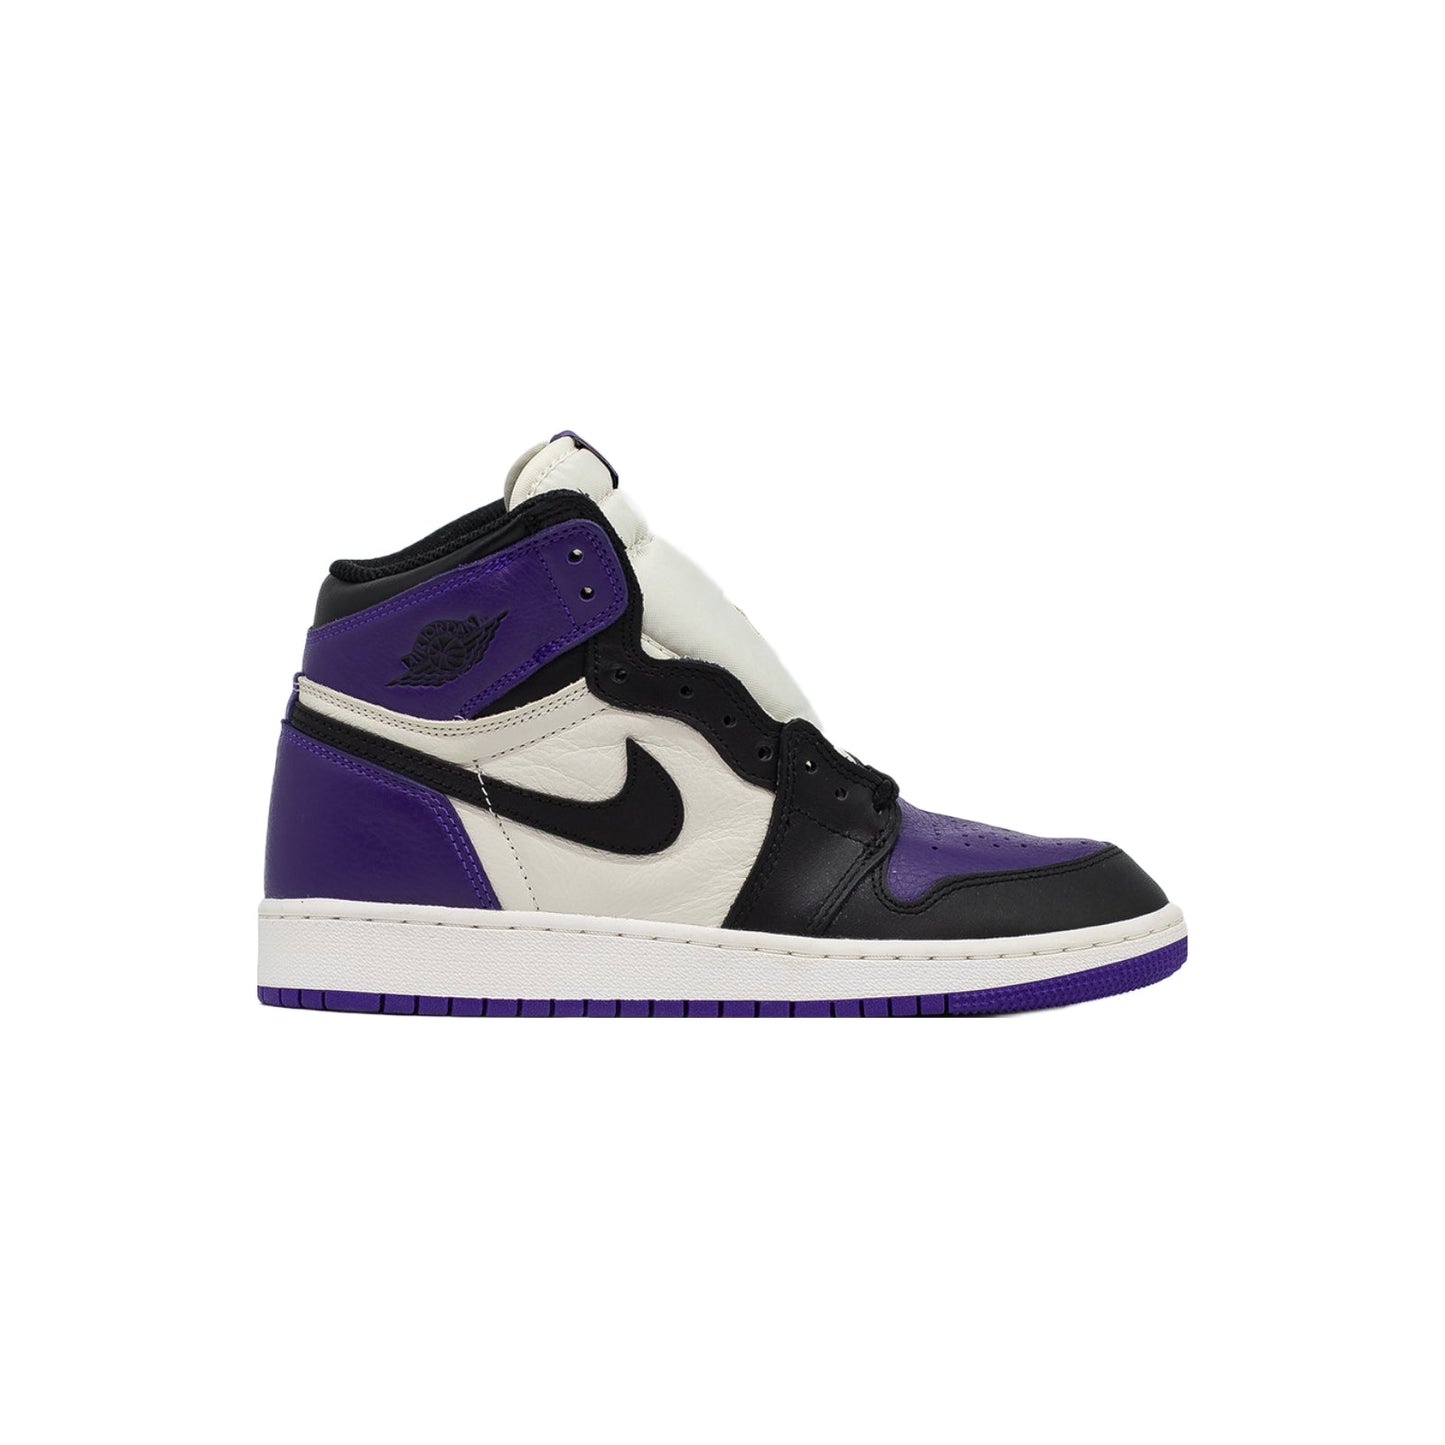 Air Nike ajko 1 air jordan storm blue black white sneakers shoes do5047-401 mens 17 (GS), Court Purple